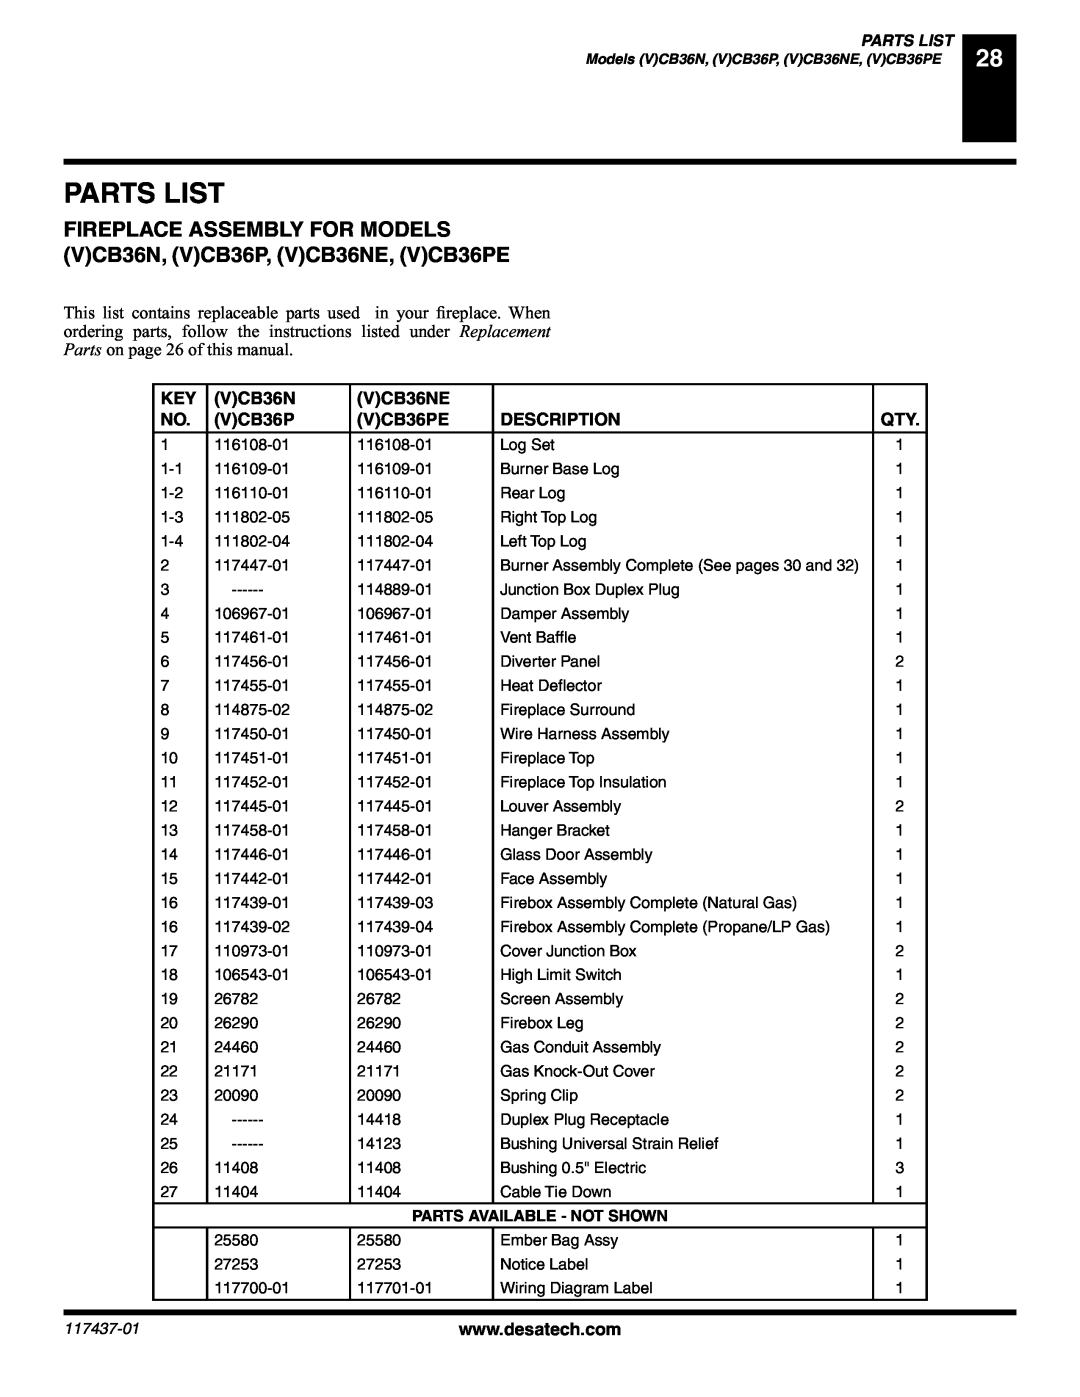 Desa (V) CB36(N installation manual Parts List, VCB36NE, VCB36PE, Description, Parts Available - Not Shown 